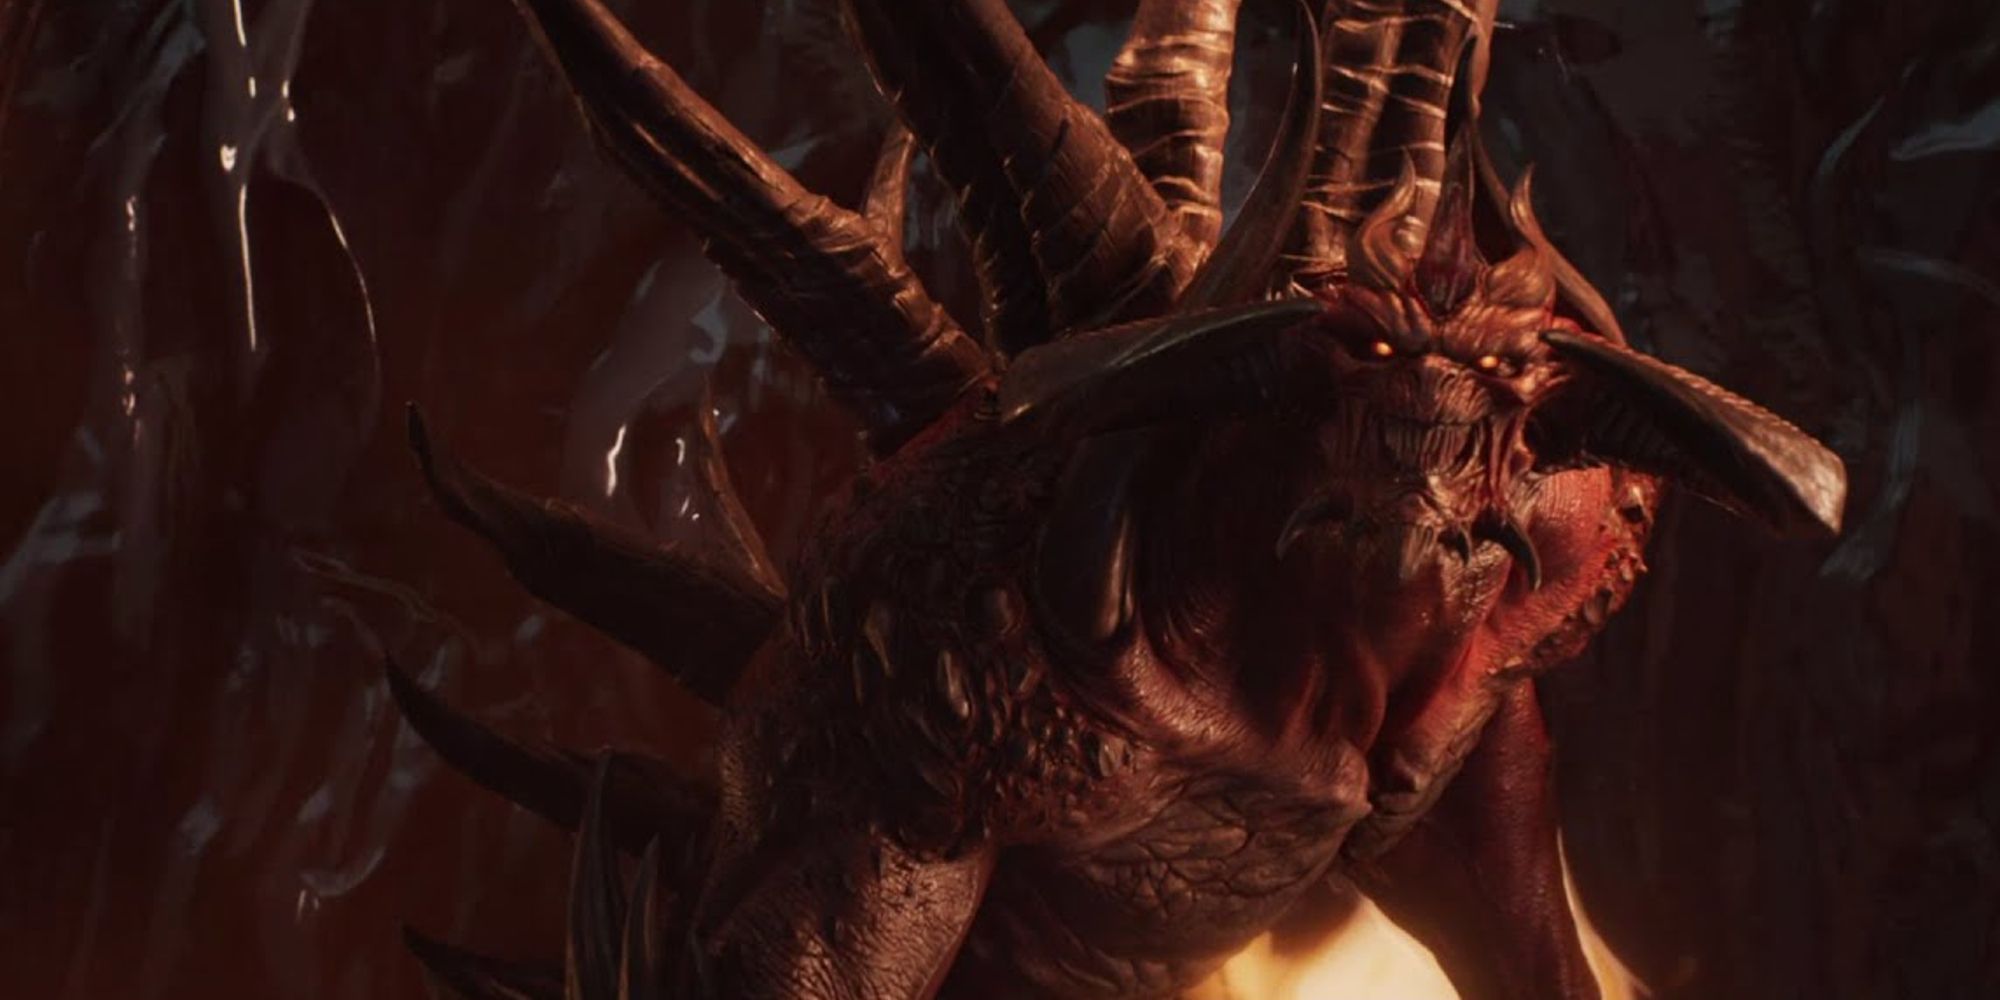 Diablo in his final form standing before the Infernal Gate to the Burning Hells in Diablo II Resurrected